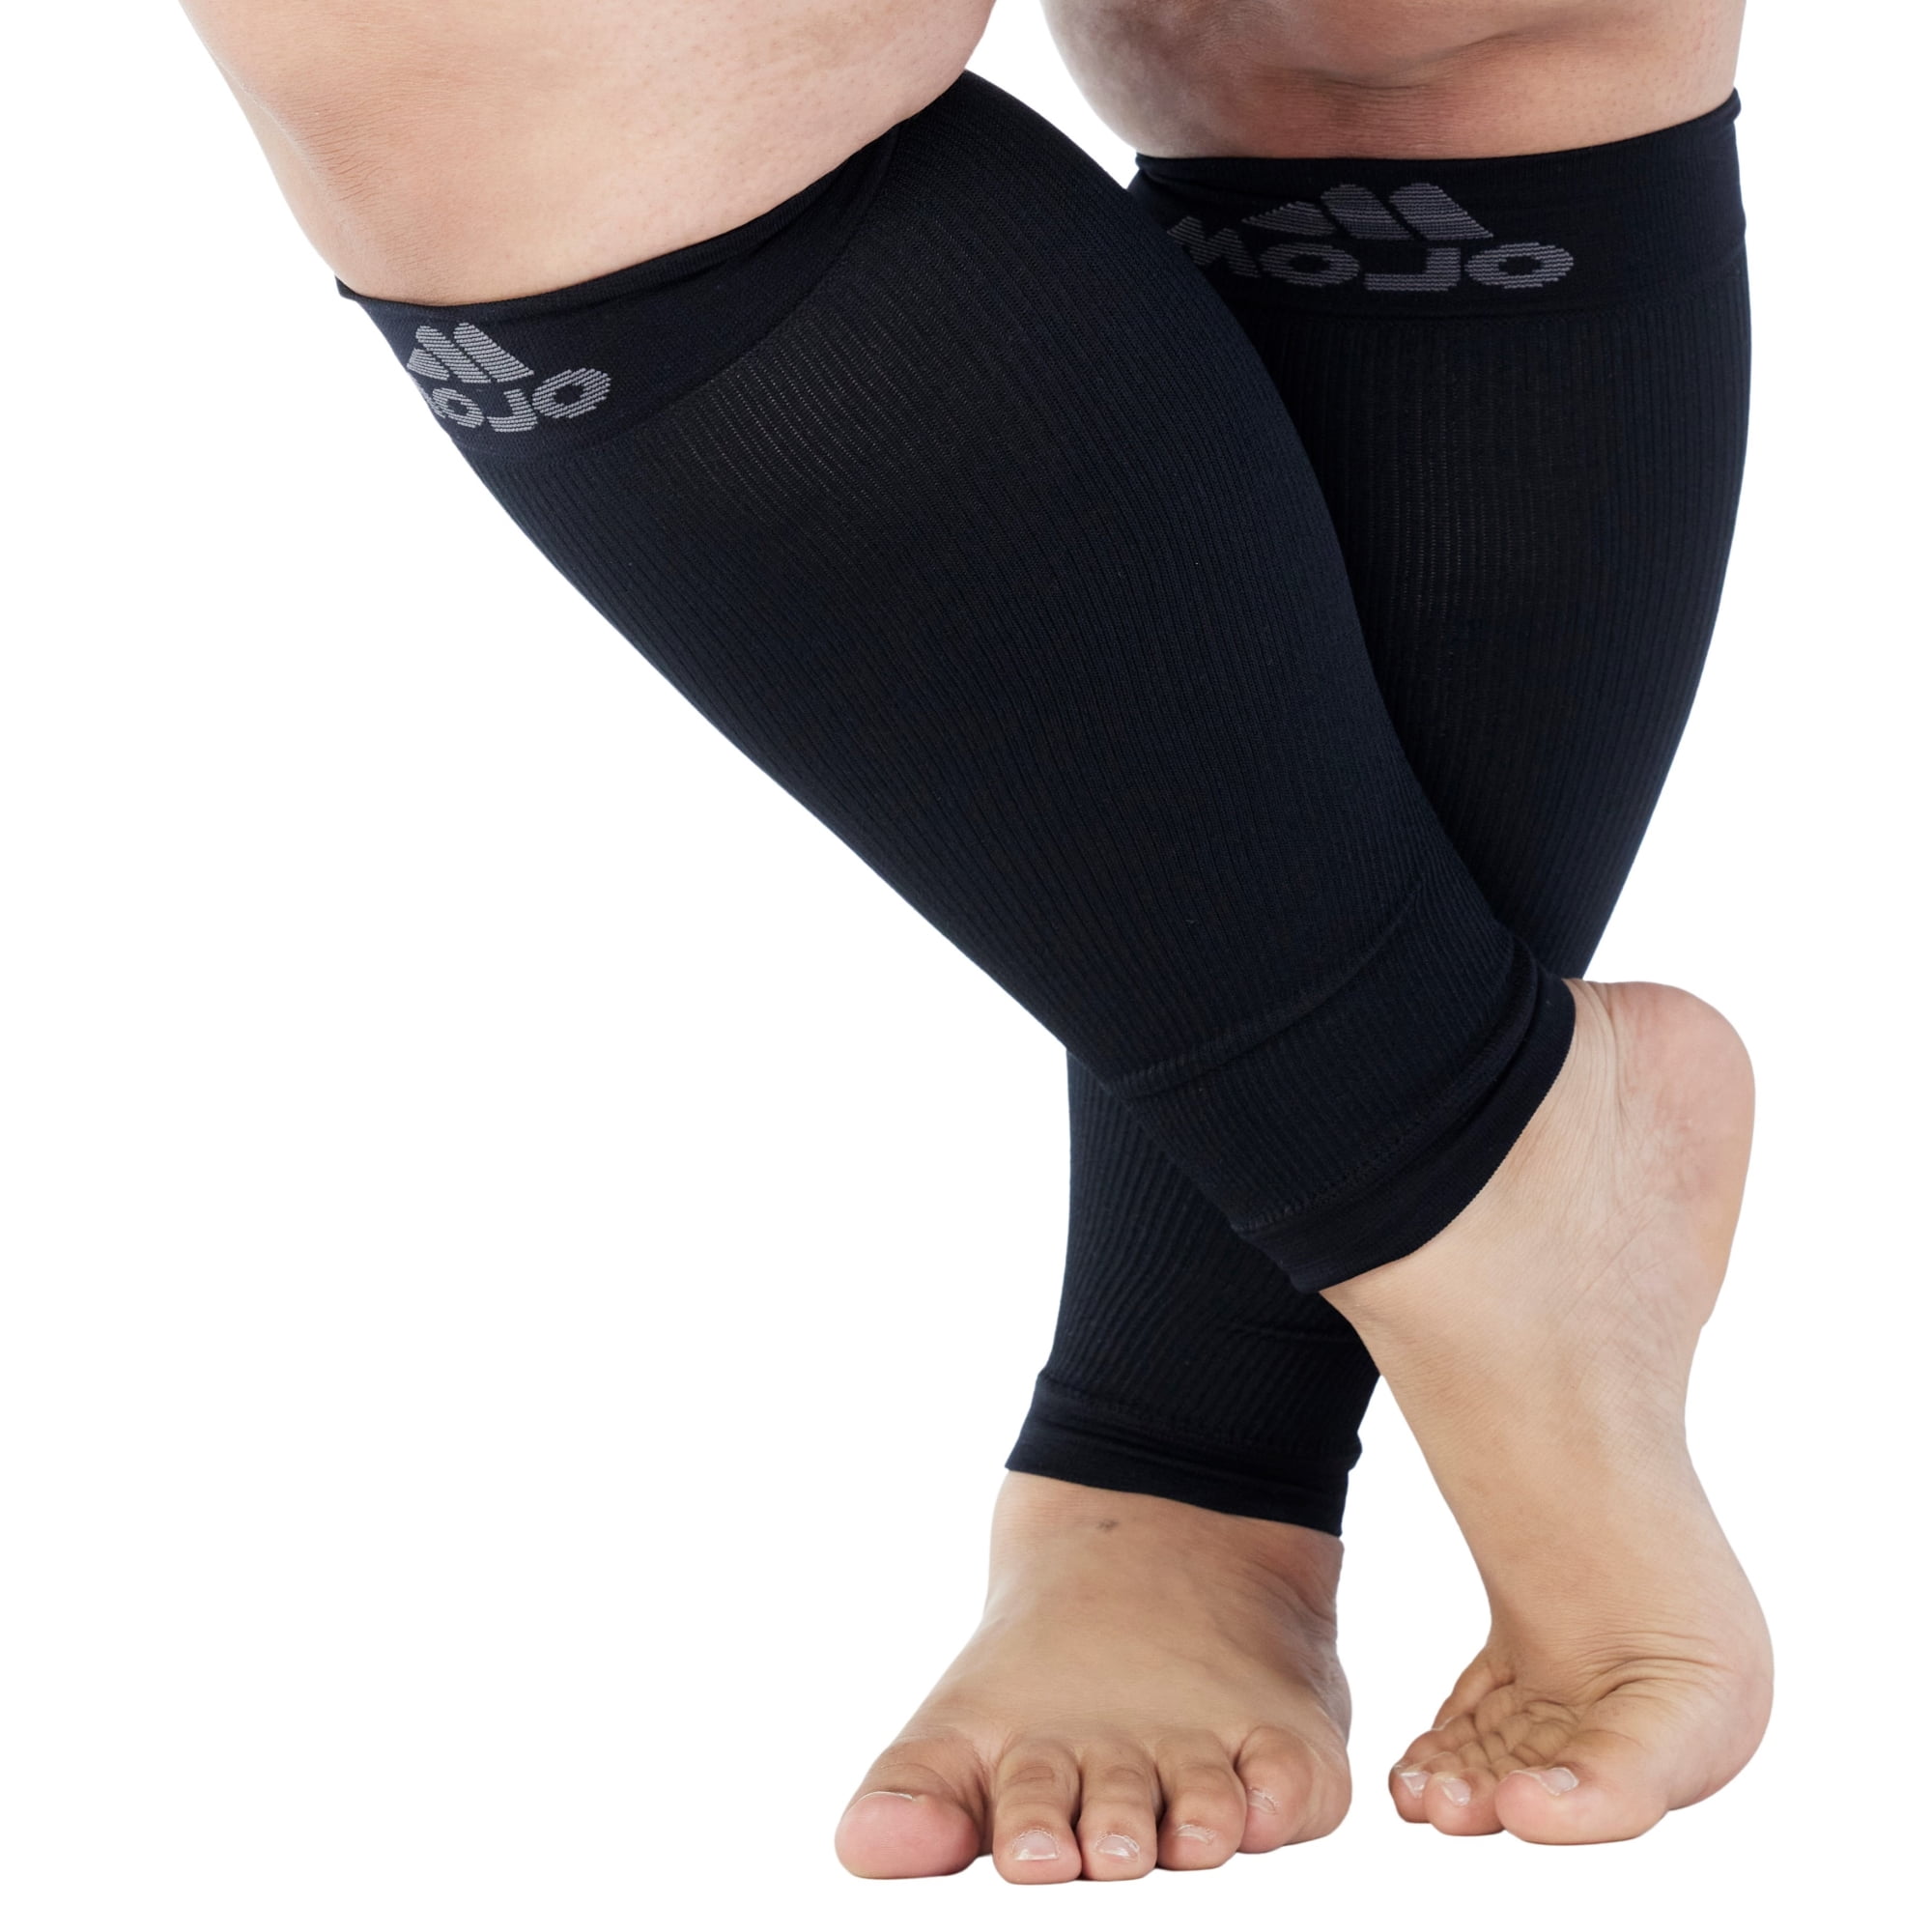  Rymora Leg Compression Sleeve, Calf Support Sleeves